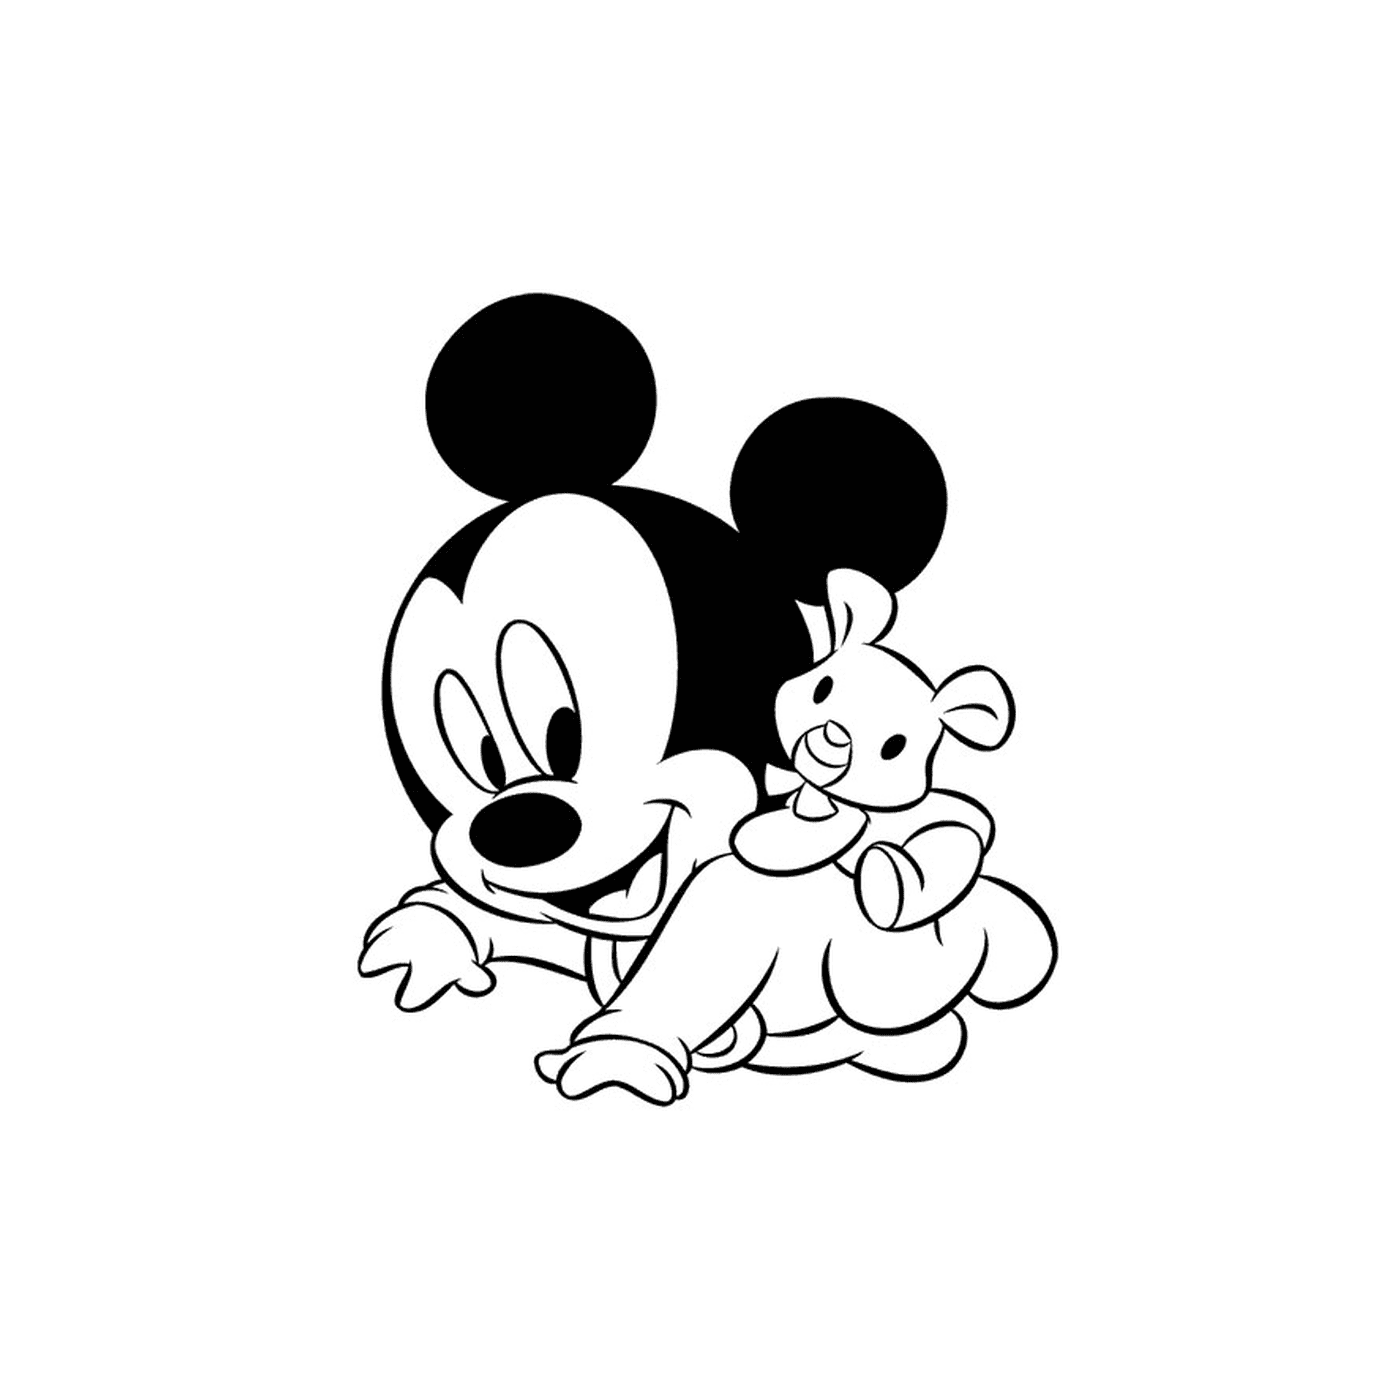  Mickey Mouse baby holding a teddy bear 